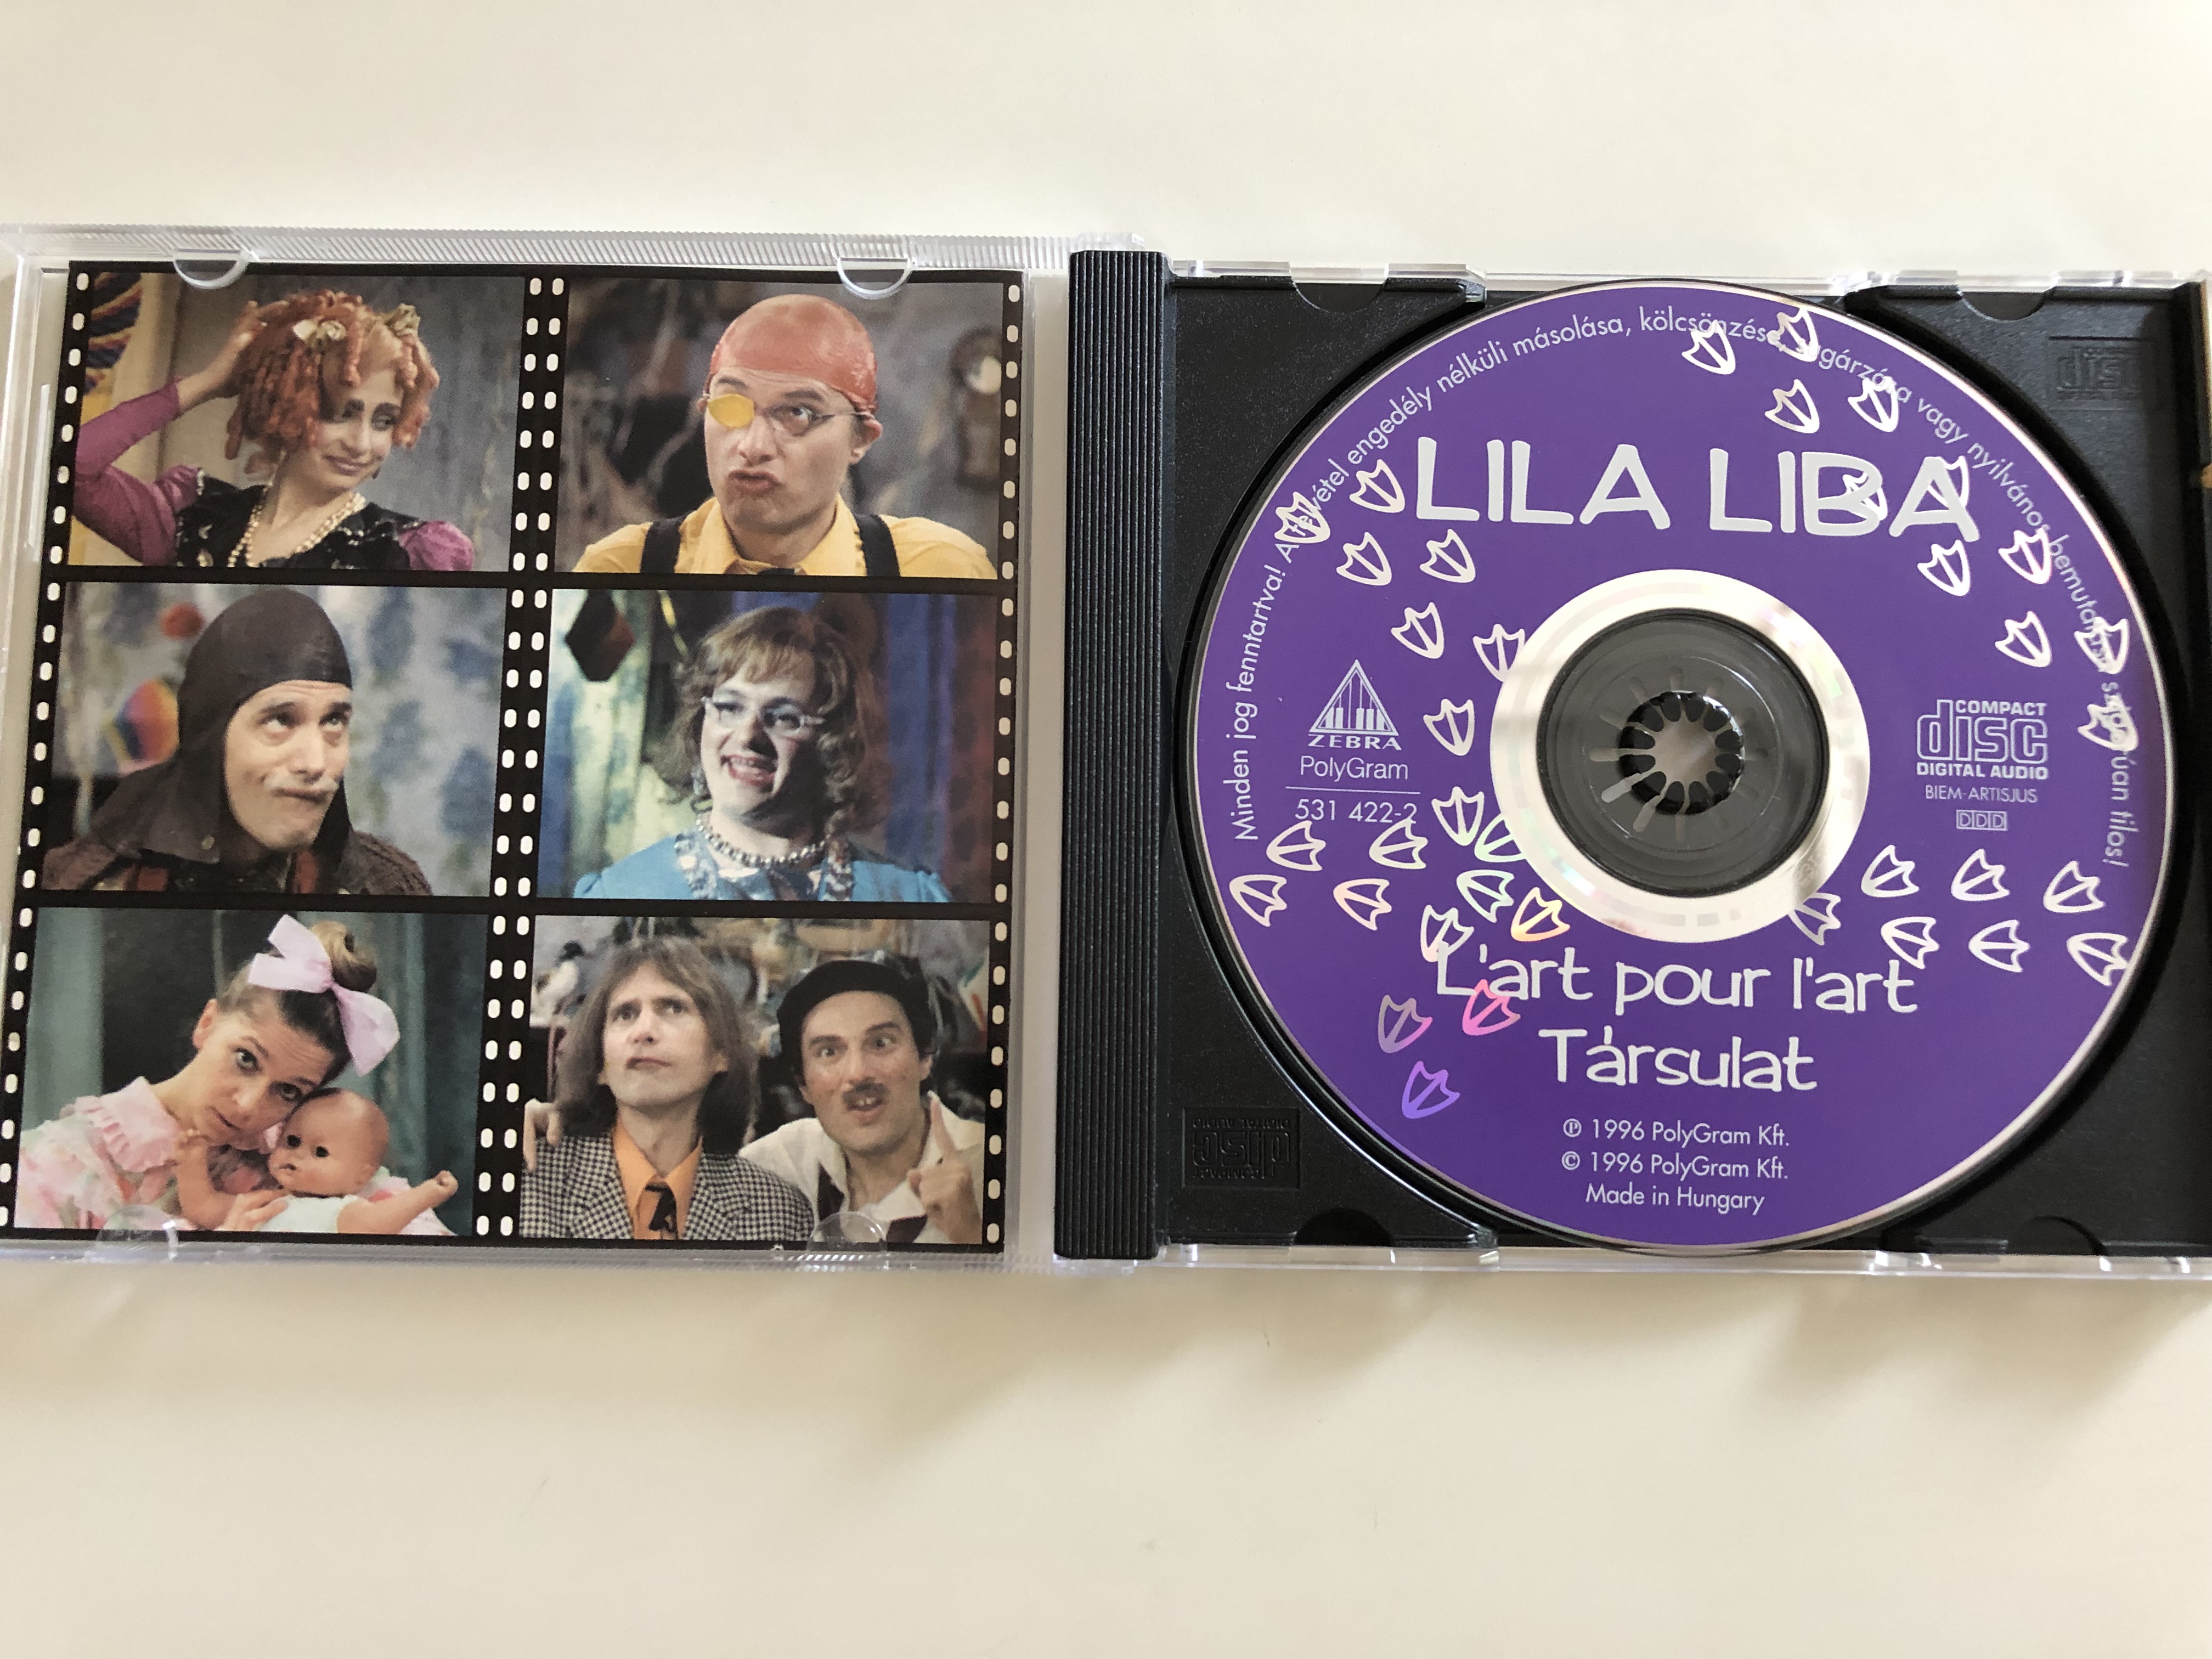 l-art-pour-l-art-t-rsulat-lila-liba-a-beseny-csal-d-s-t-rsai-hungarian-comedy-audio-cd-1996-polygram-531-422-2-4-.jpg